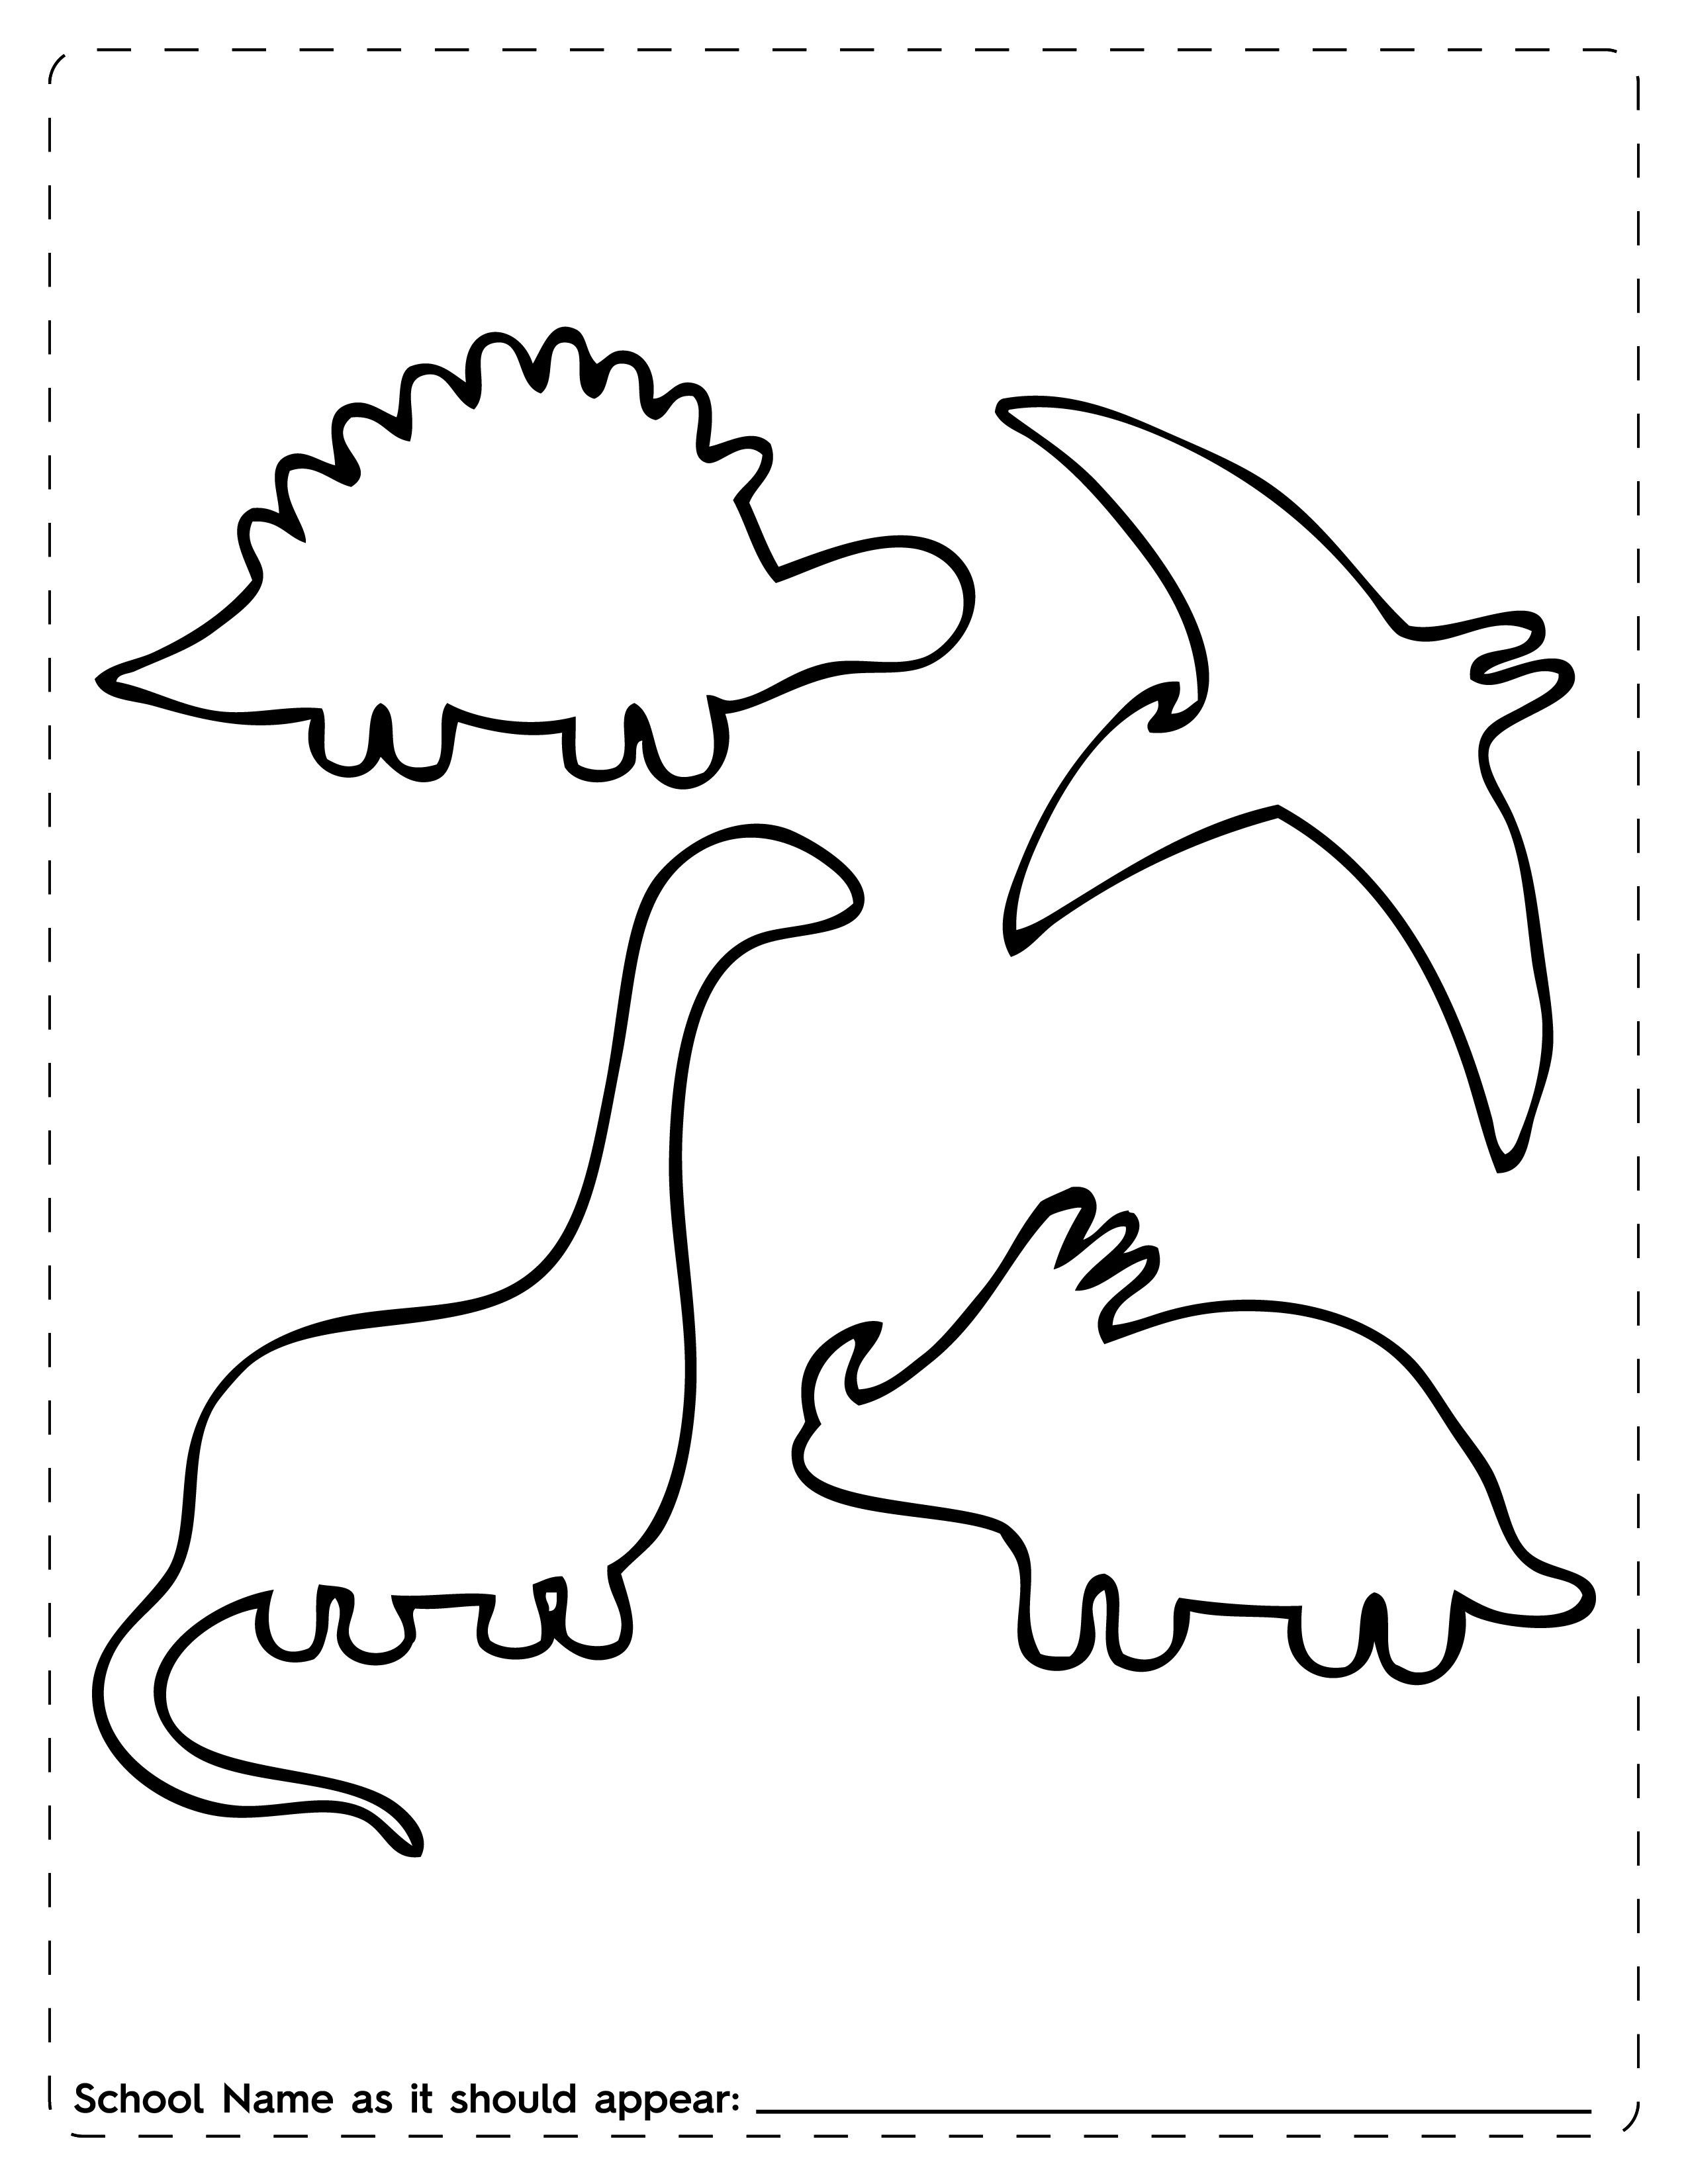 Dinosaur Outline Template